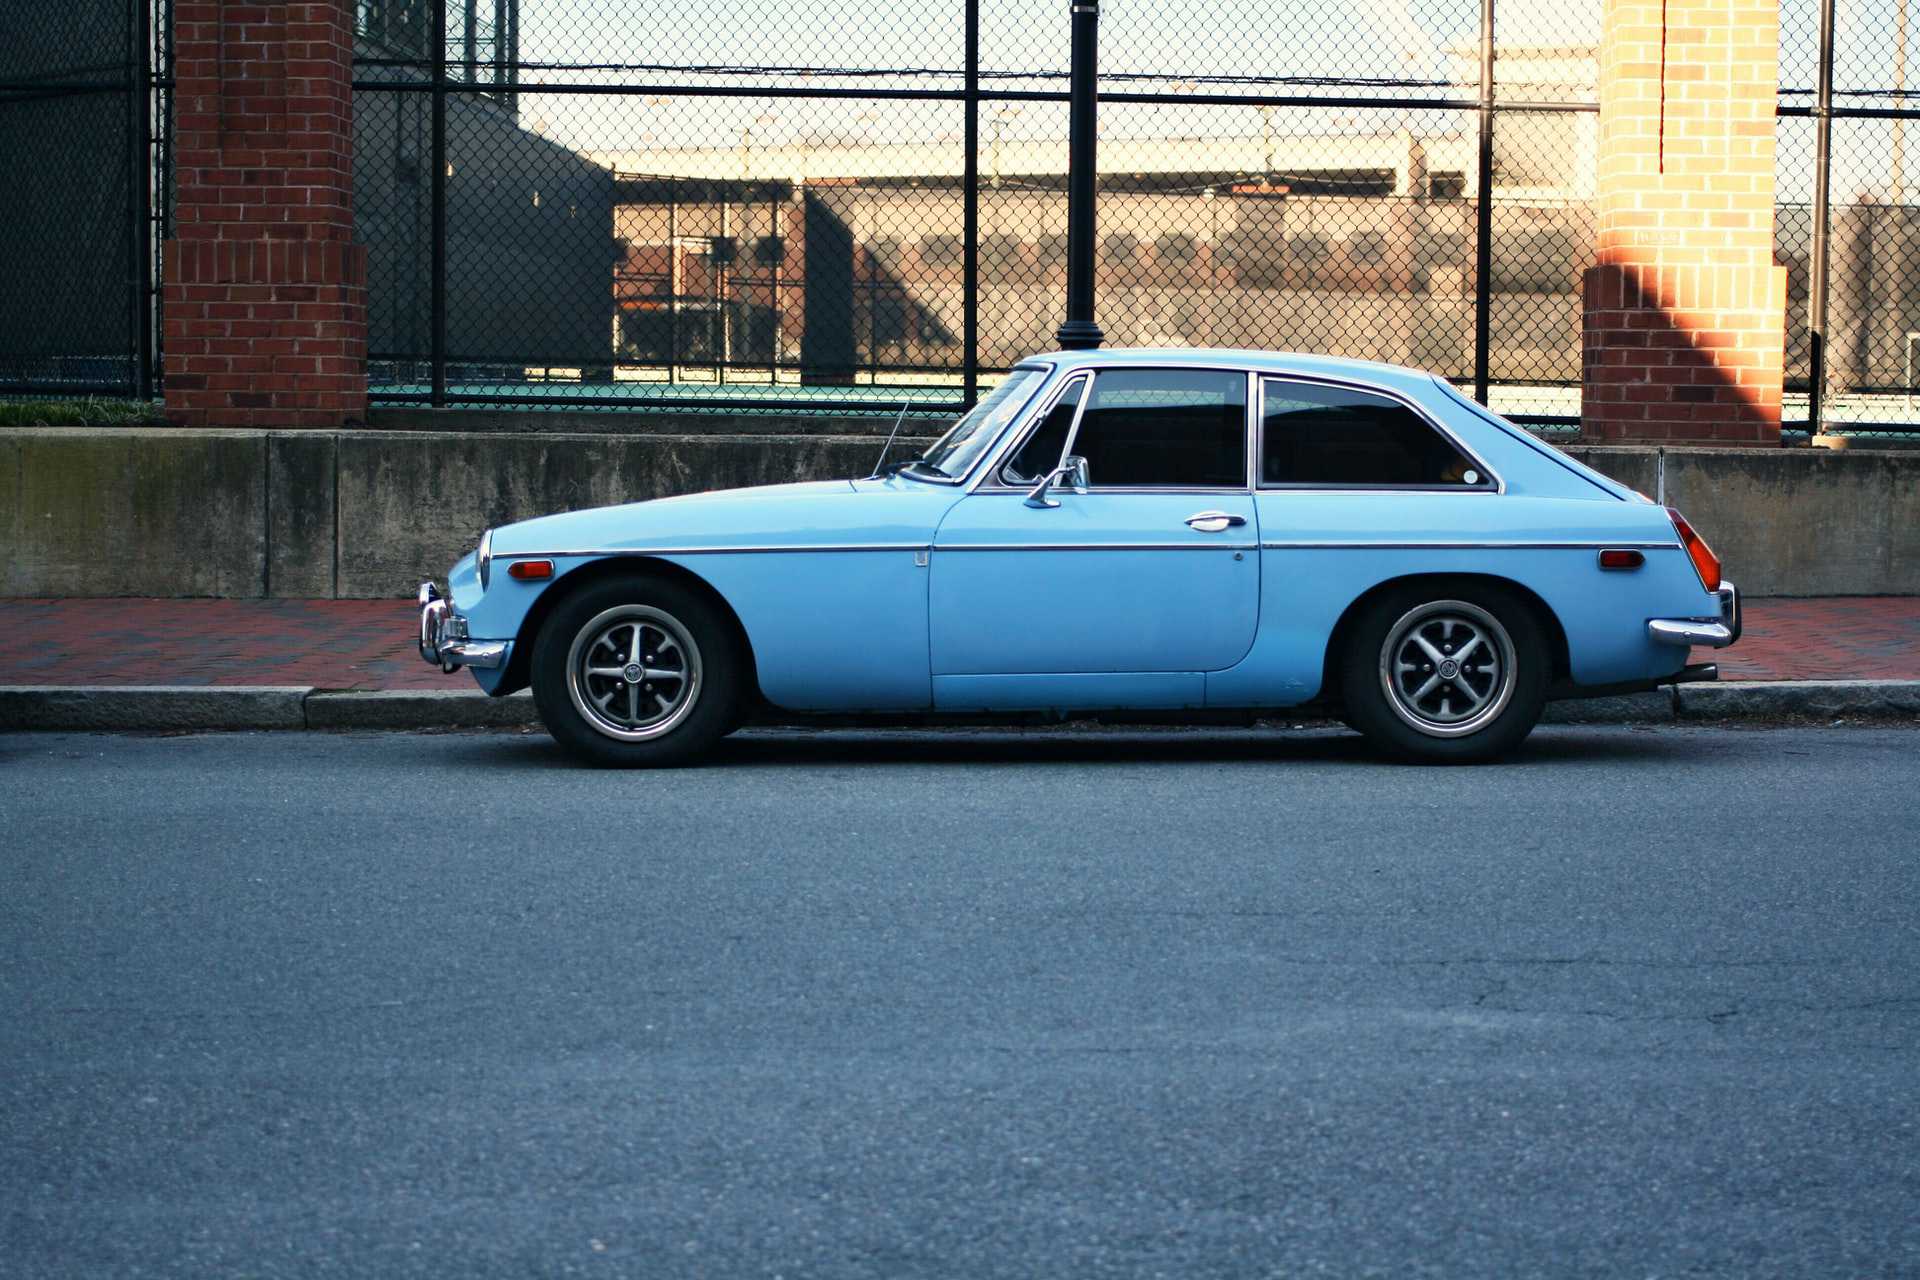 Parked Blue Oldtimer Sedan | Goodwill Car Donations